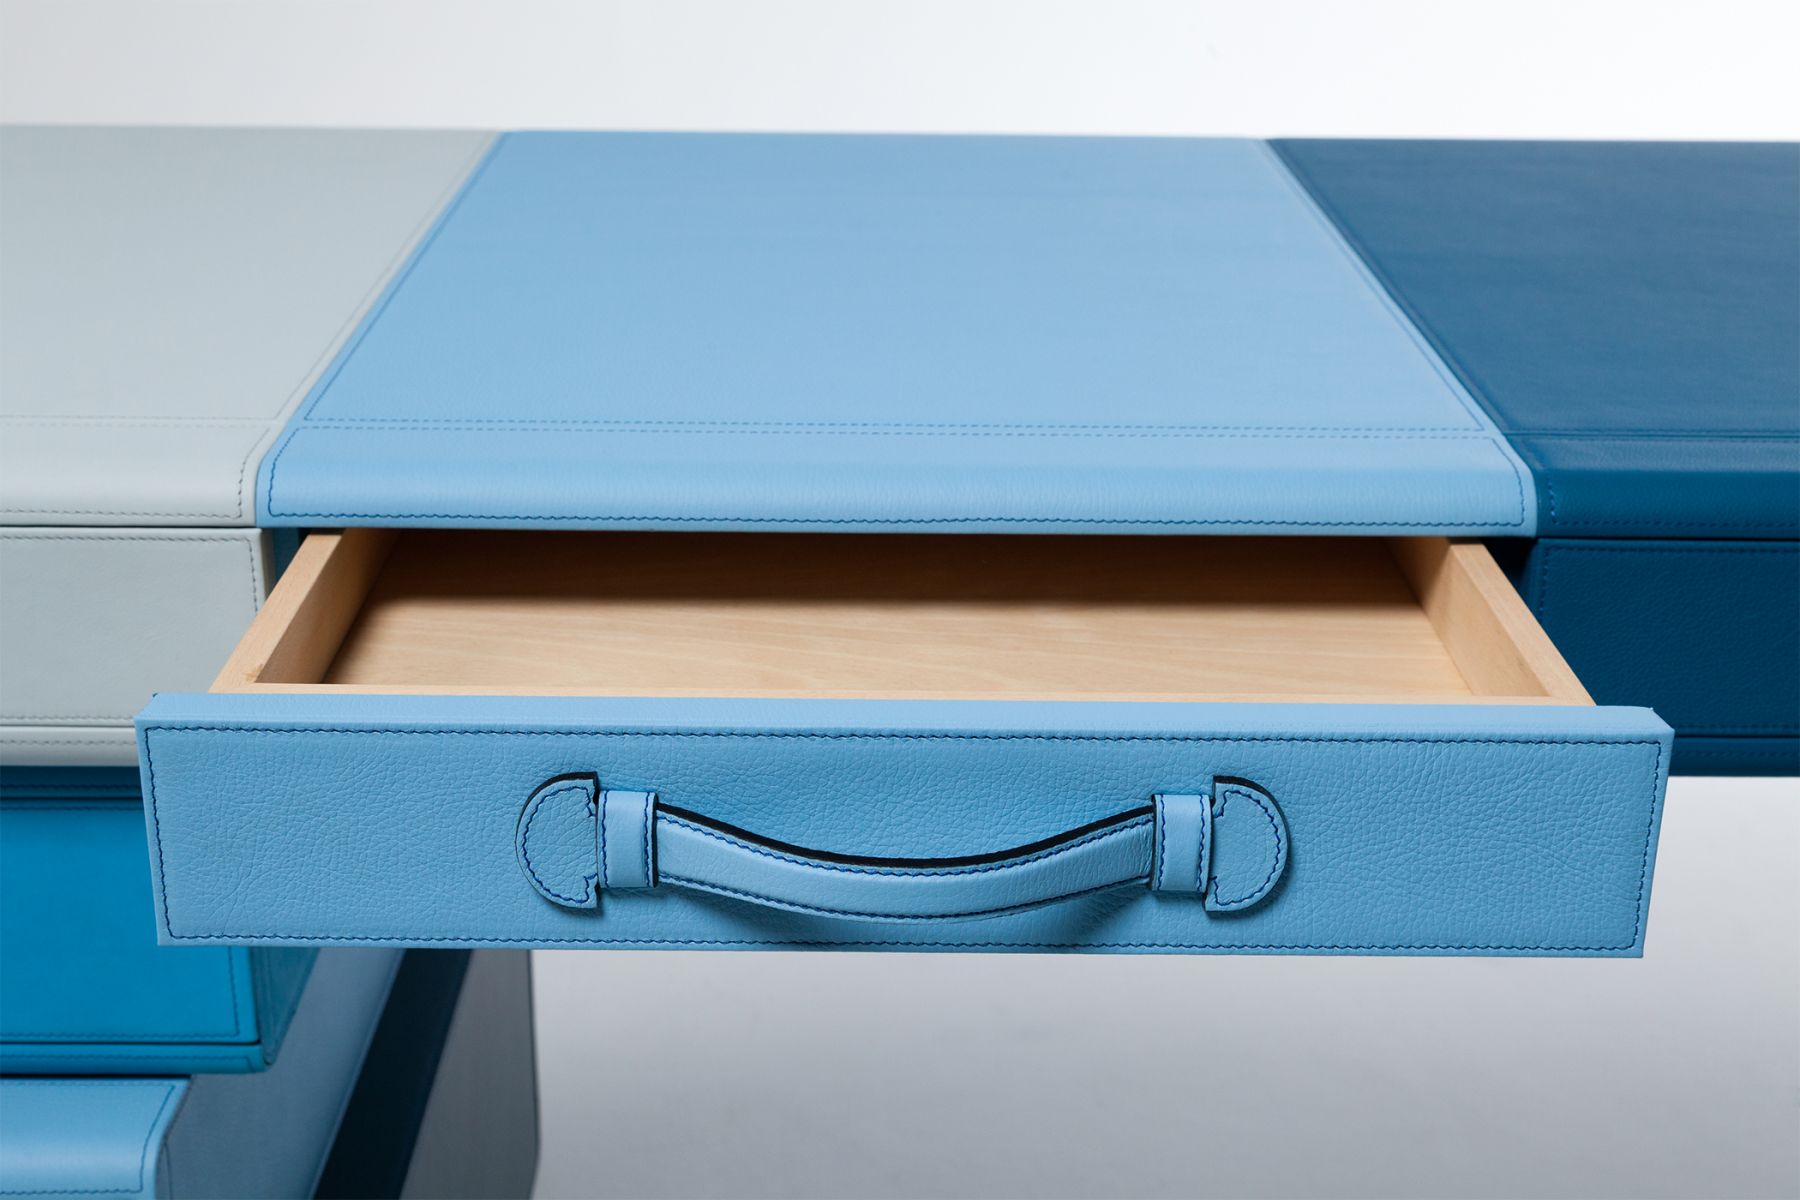 Scrivania 'Desk of briefcases' Maarten De Ceulaer pic-3